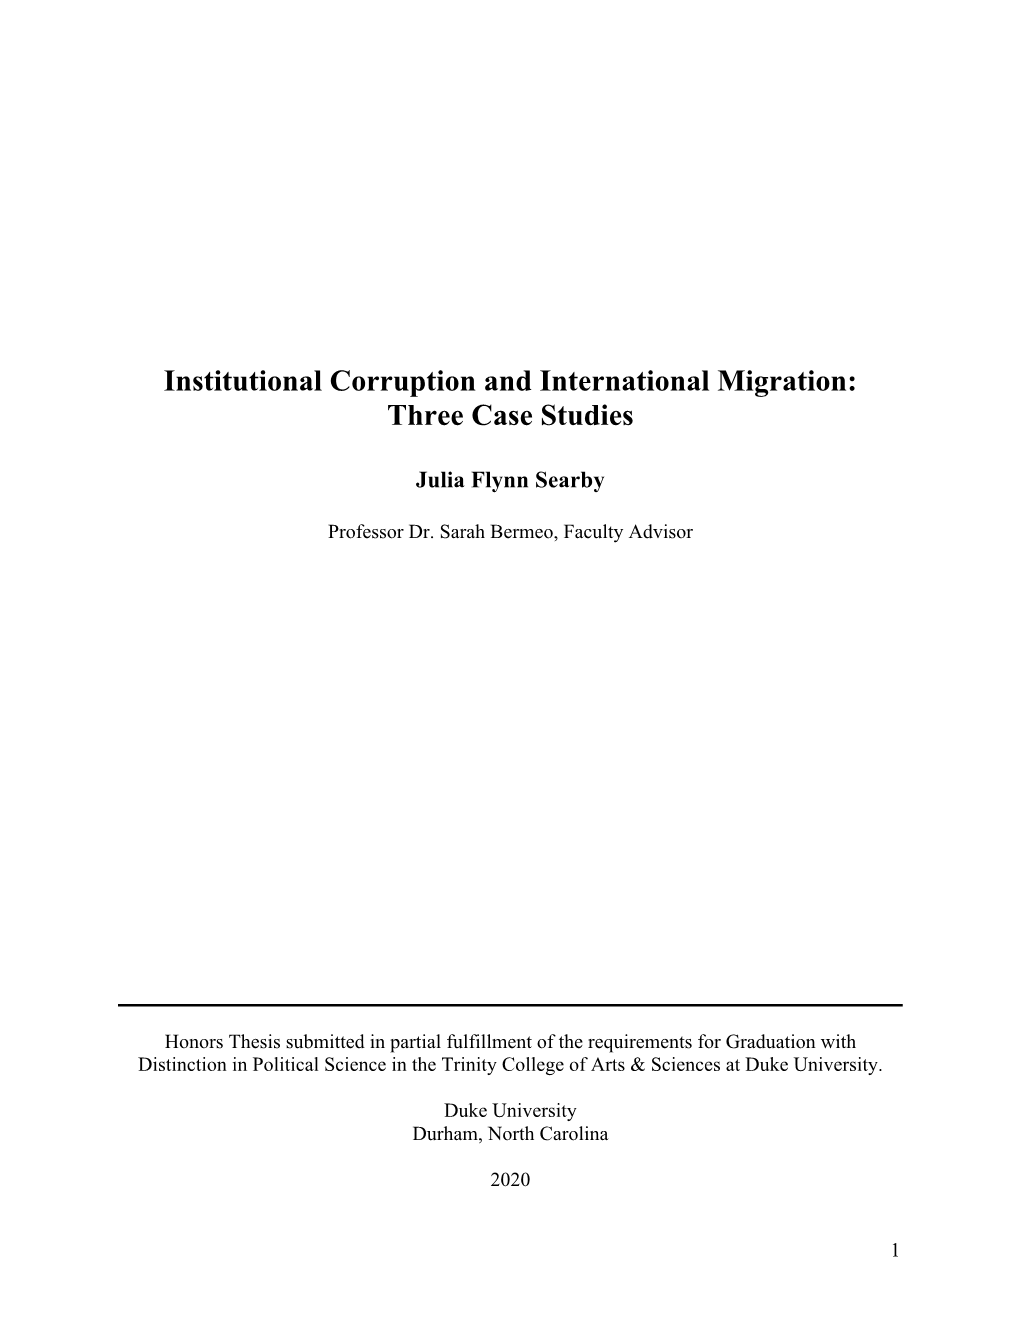 Institutional Corruption and International Migration: Three Case Studies